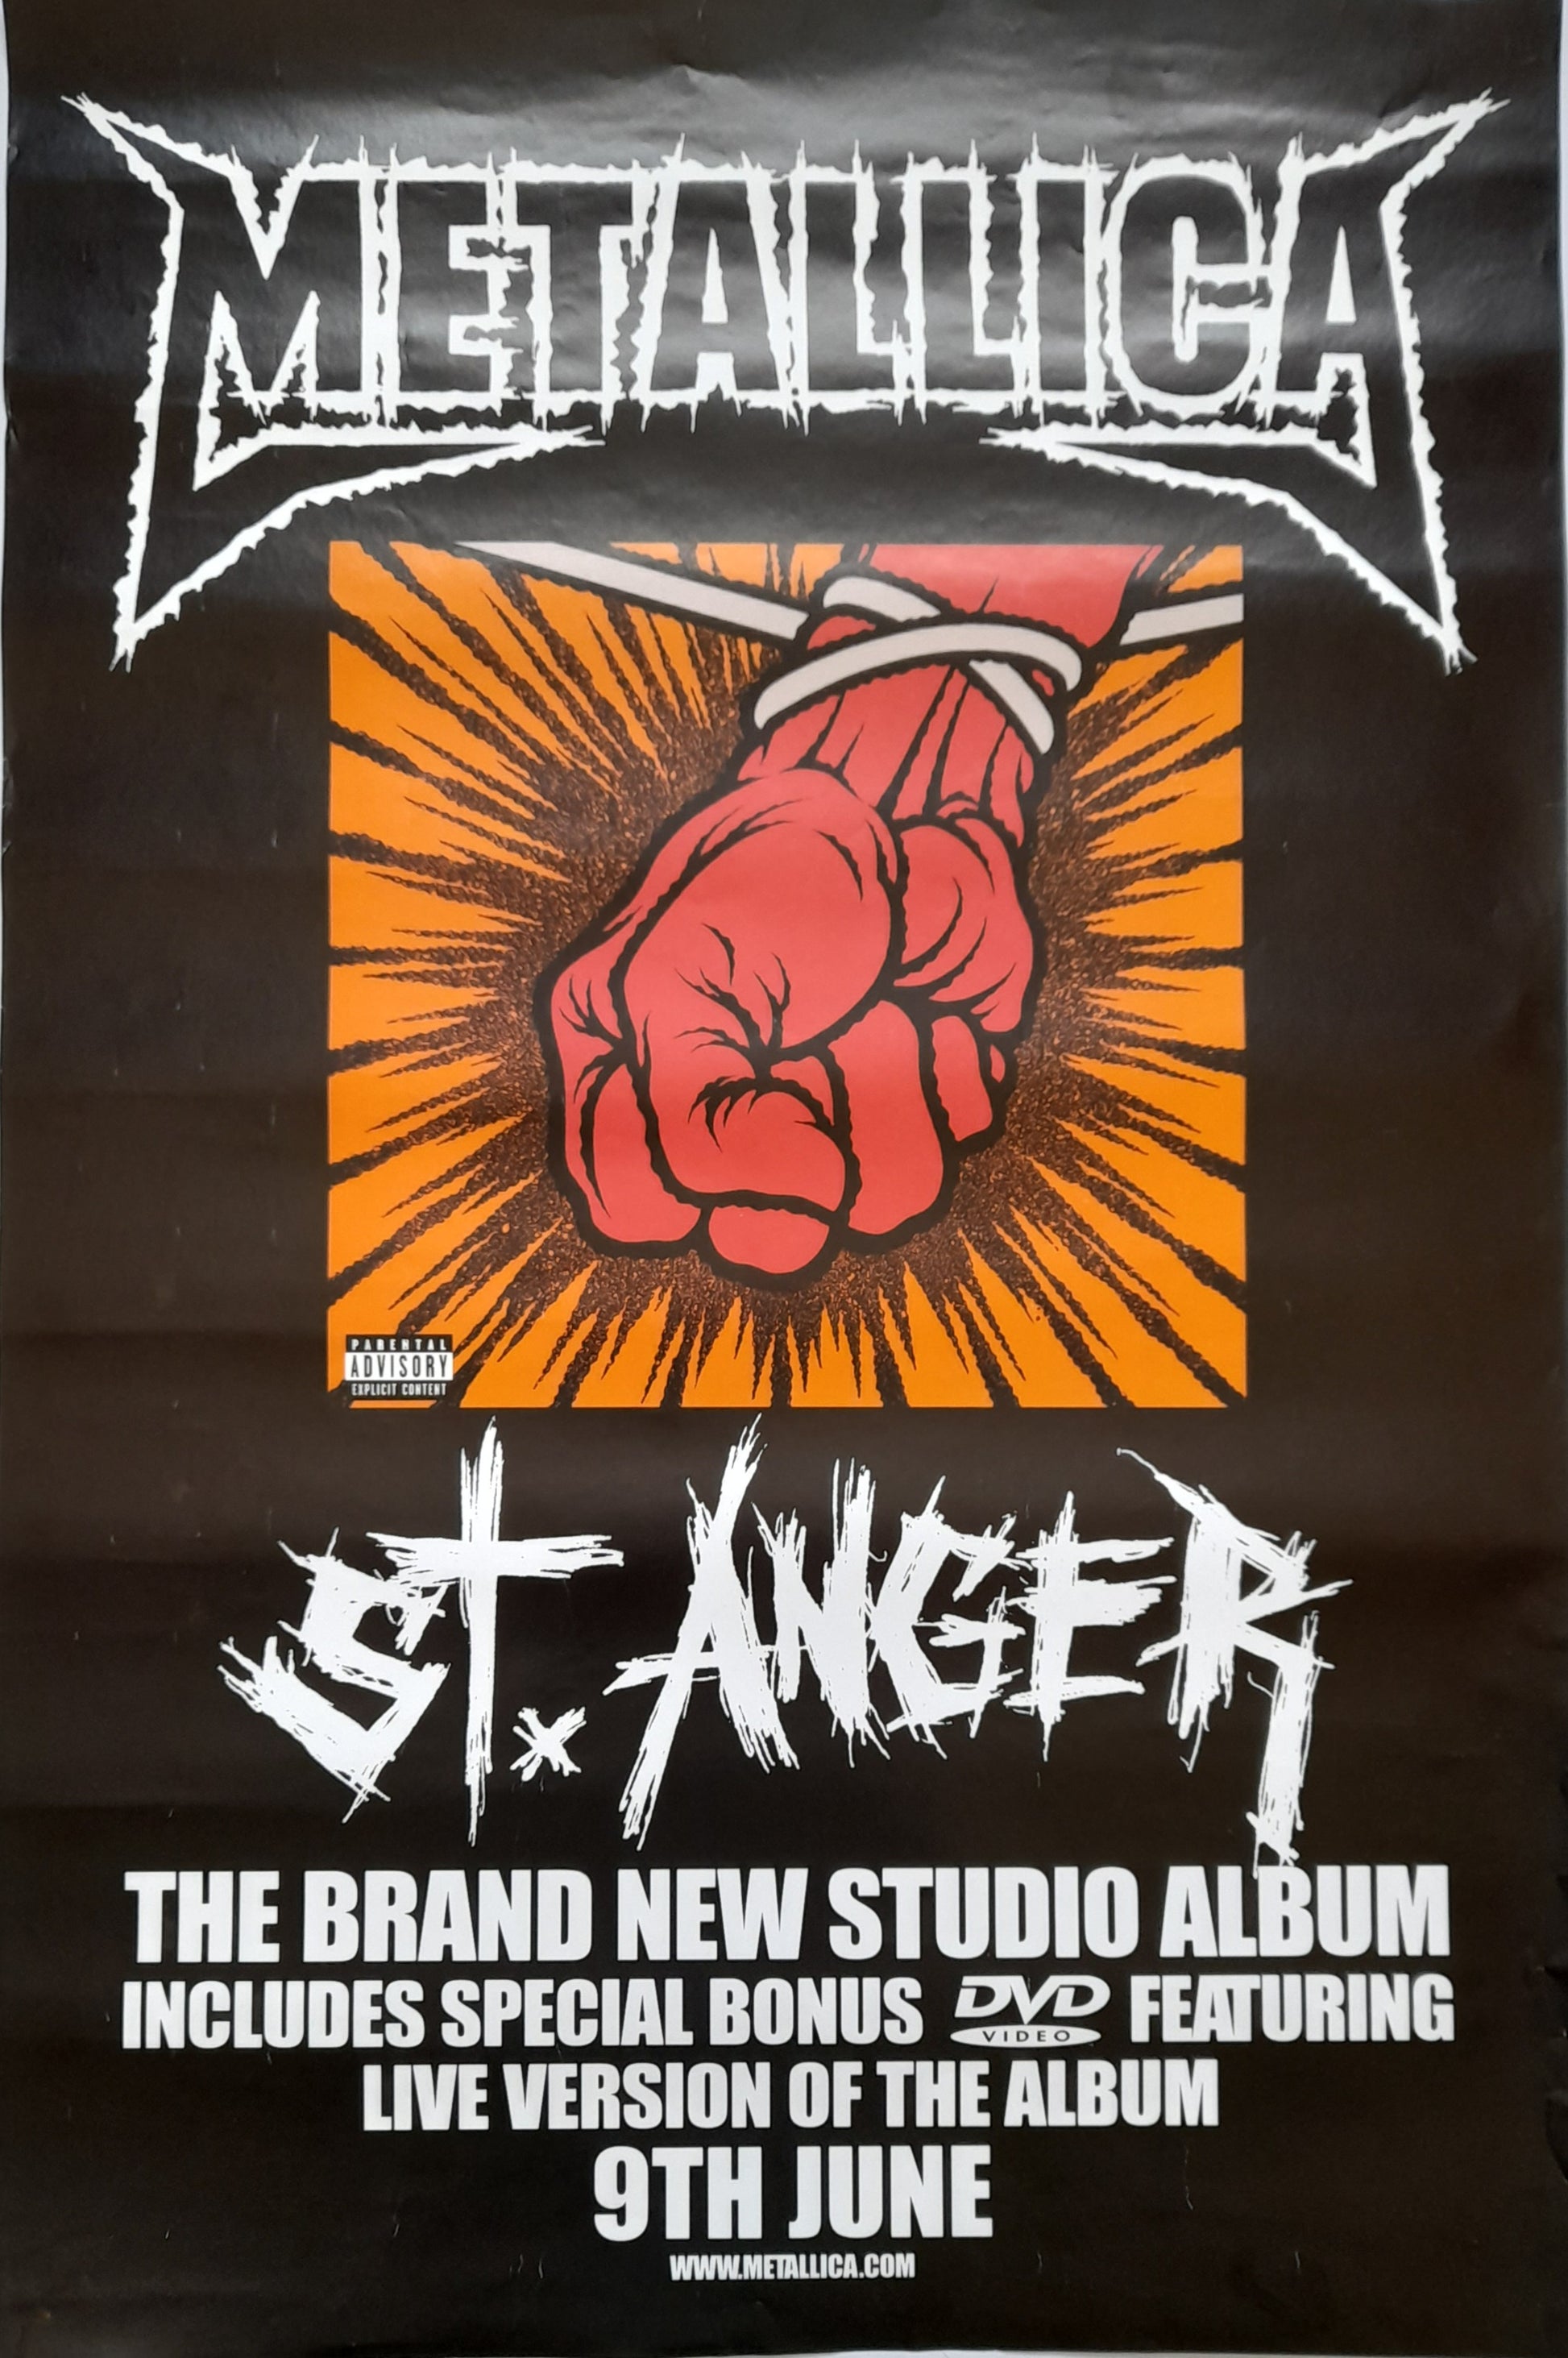 Metallica St Anger studio album UK Promotional Poster